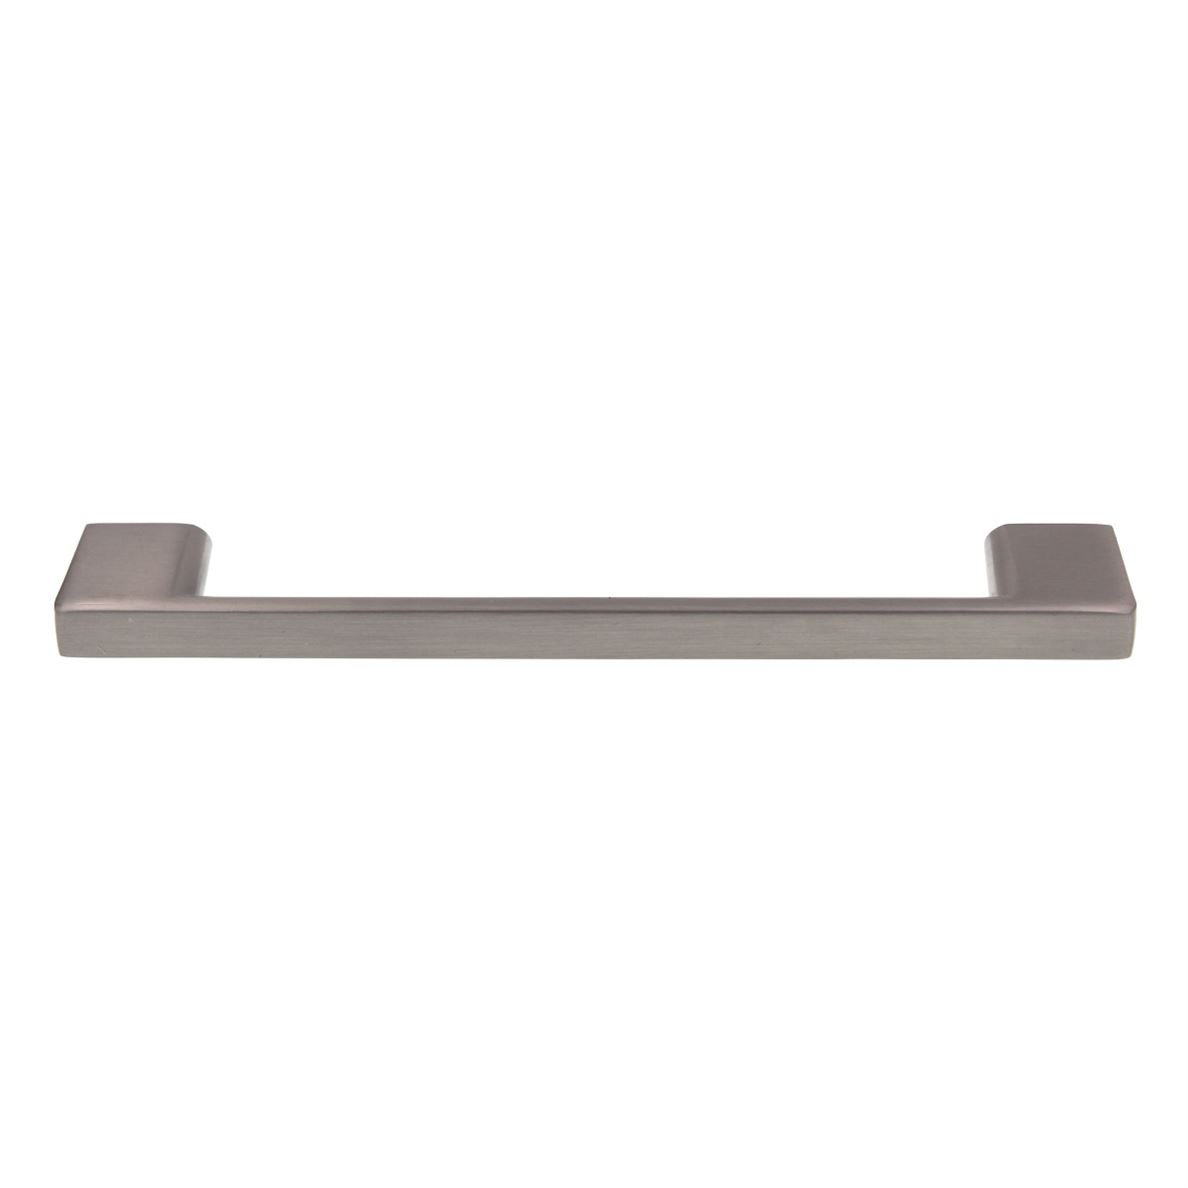 Pride Miami Square Cabinet Bar Pull 5" (128mm) Ctr Satin Nickel P81572-SN